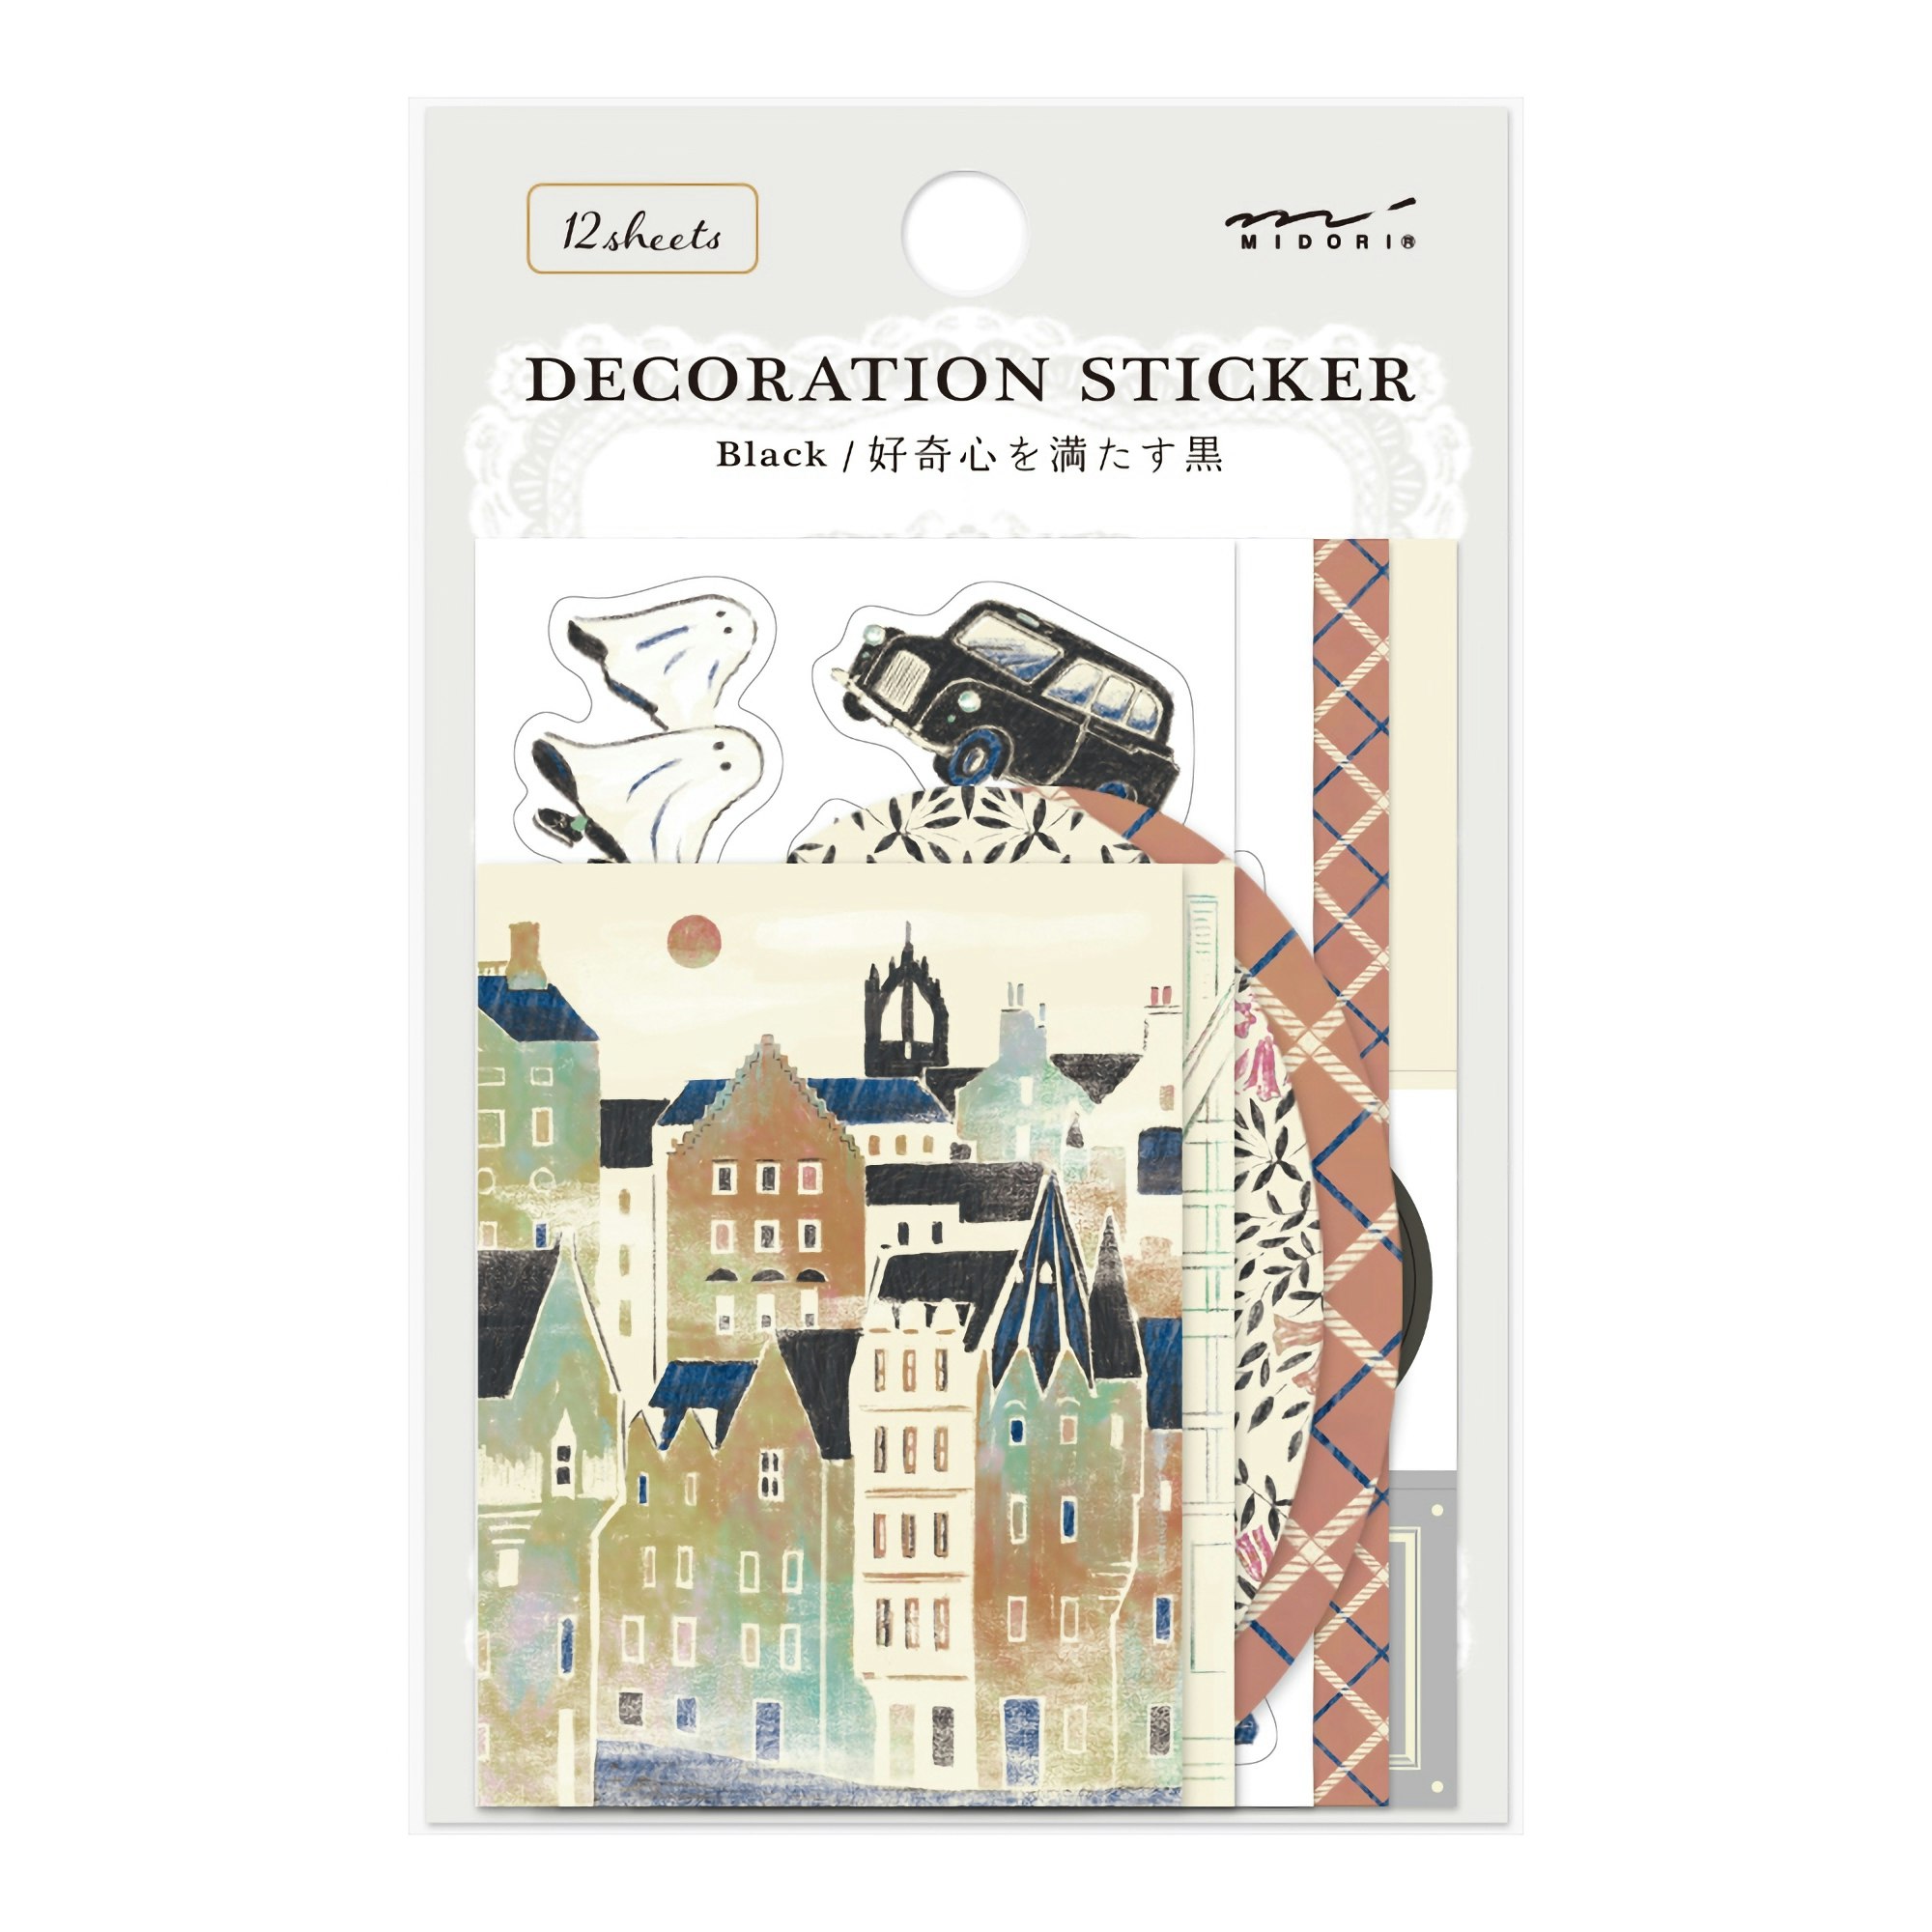 Midori Decoration Sticker Black